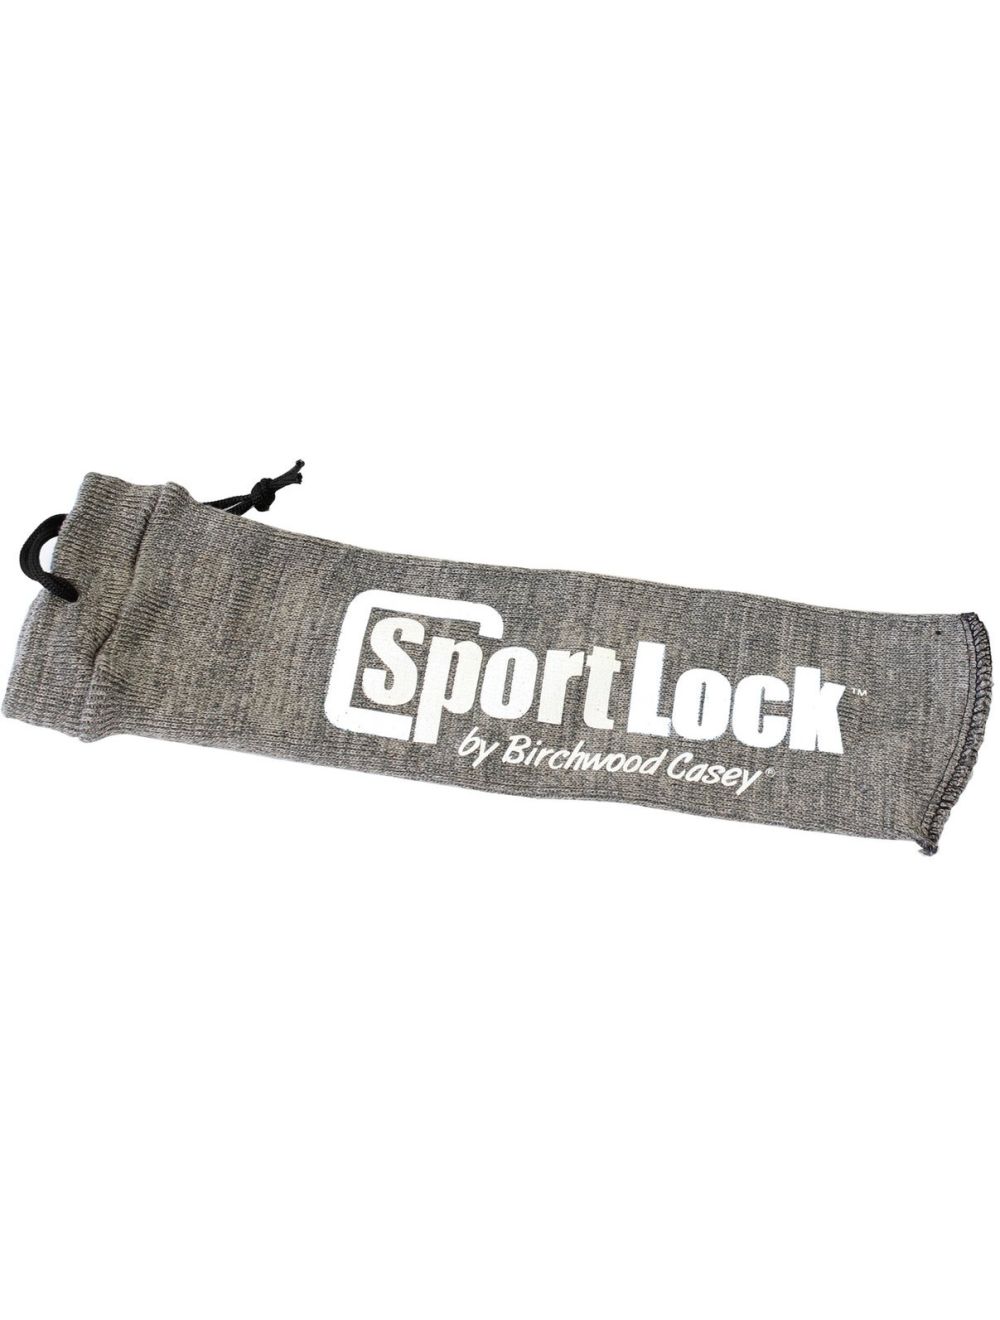 SportLock Silicone Handgun Gun Sleeve